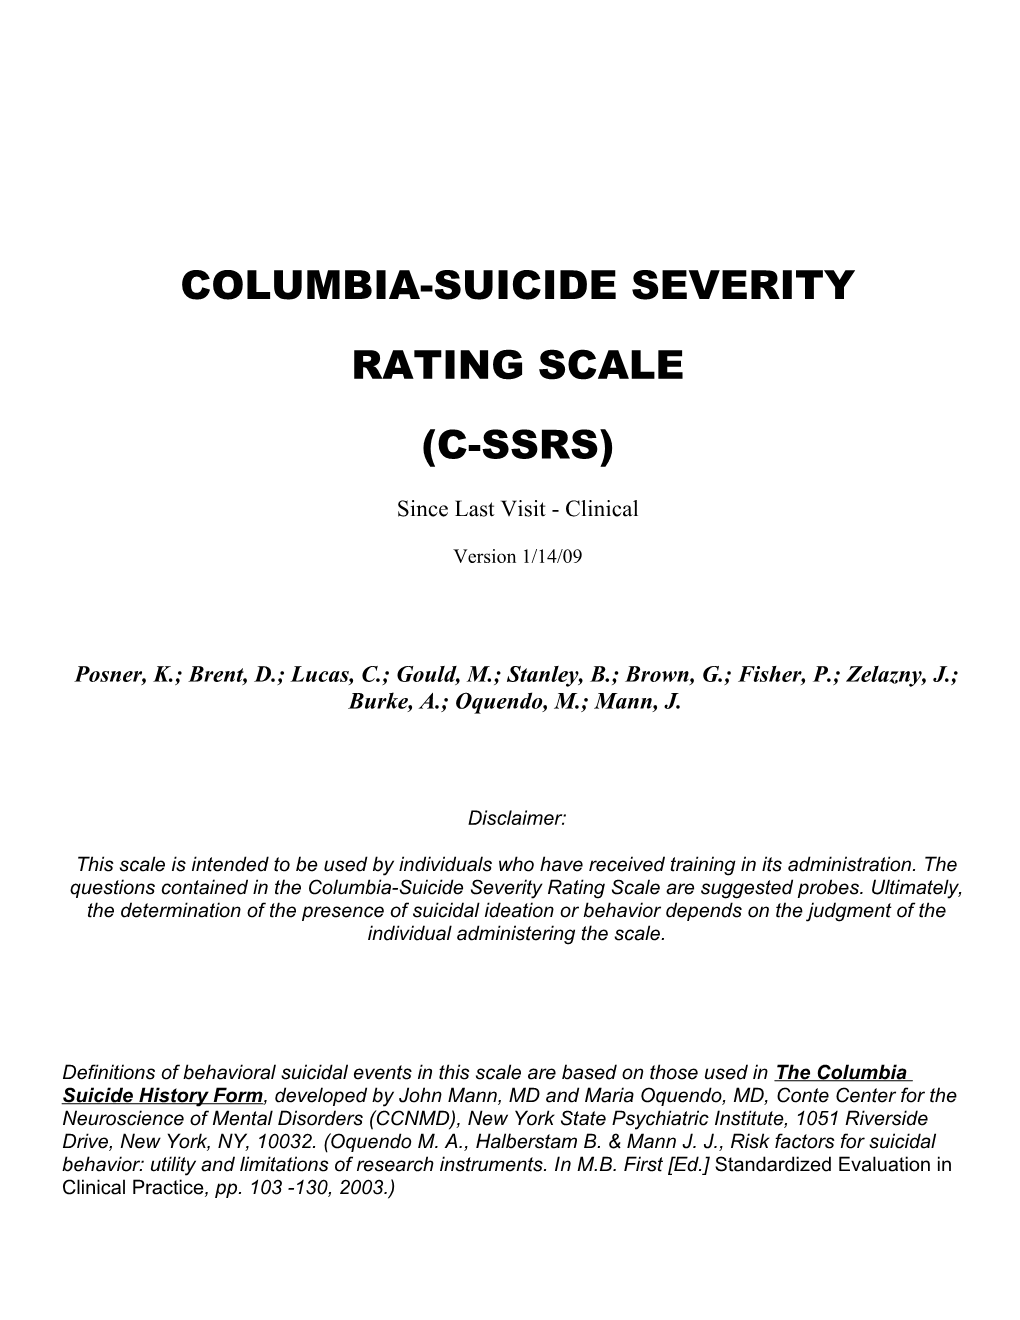 Columbia-Suicide Severity